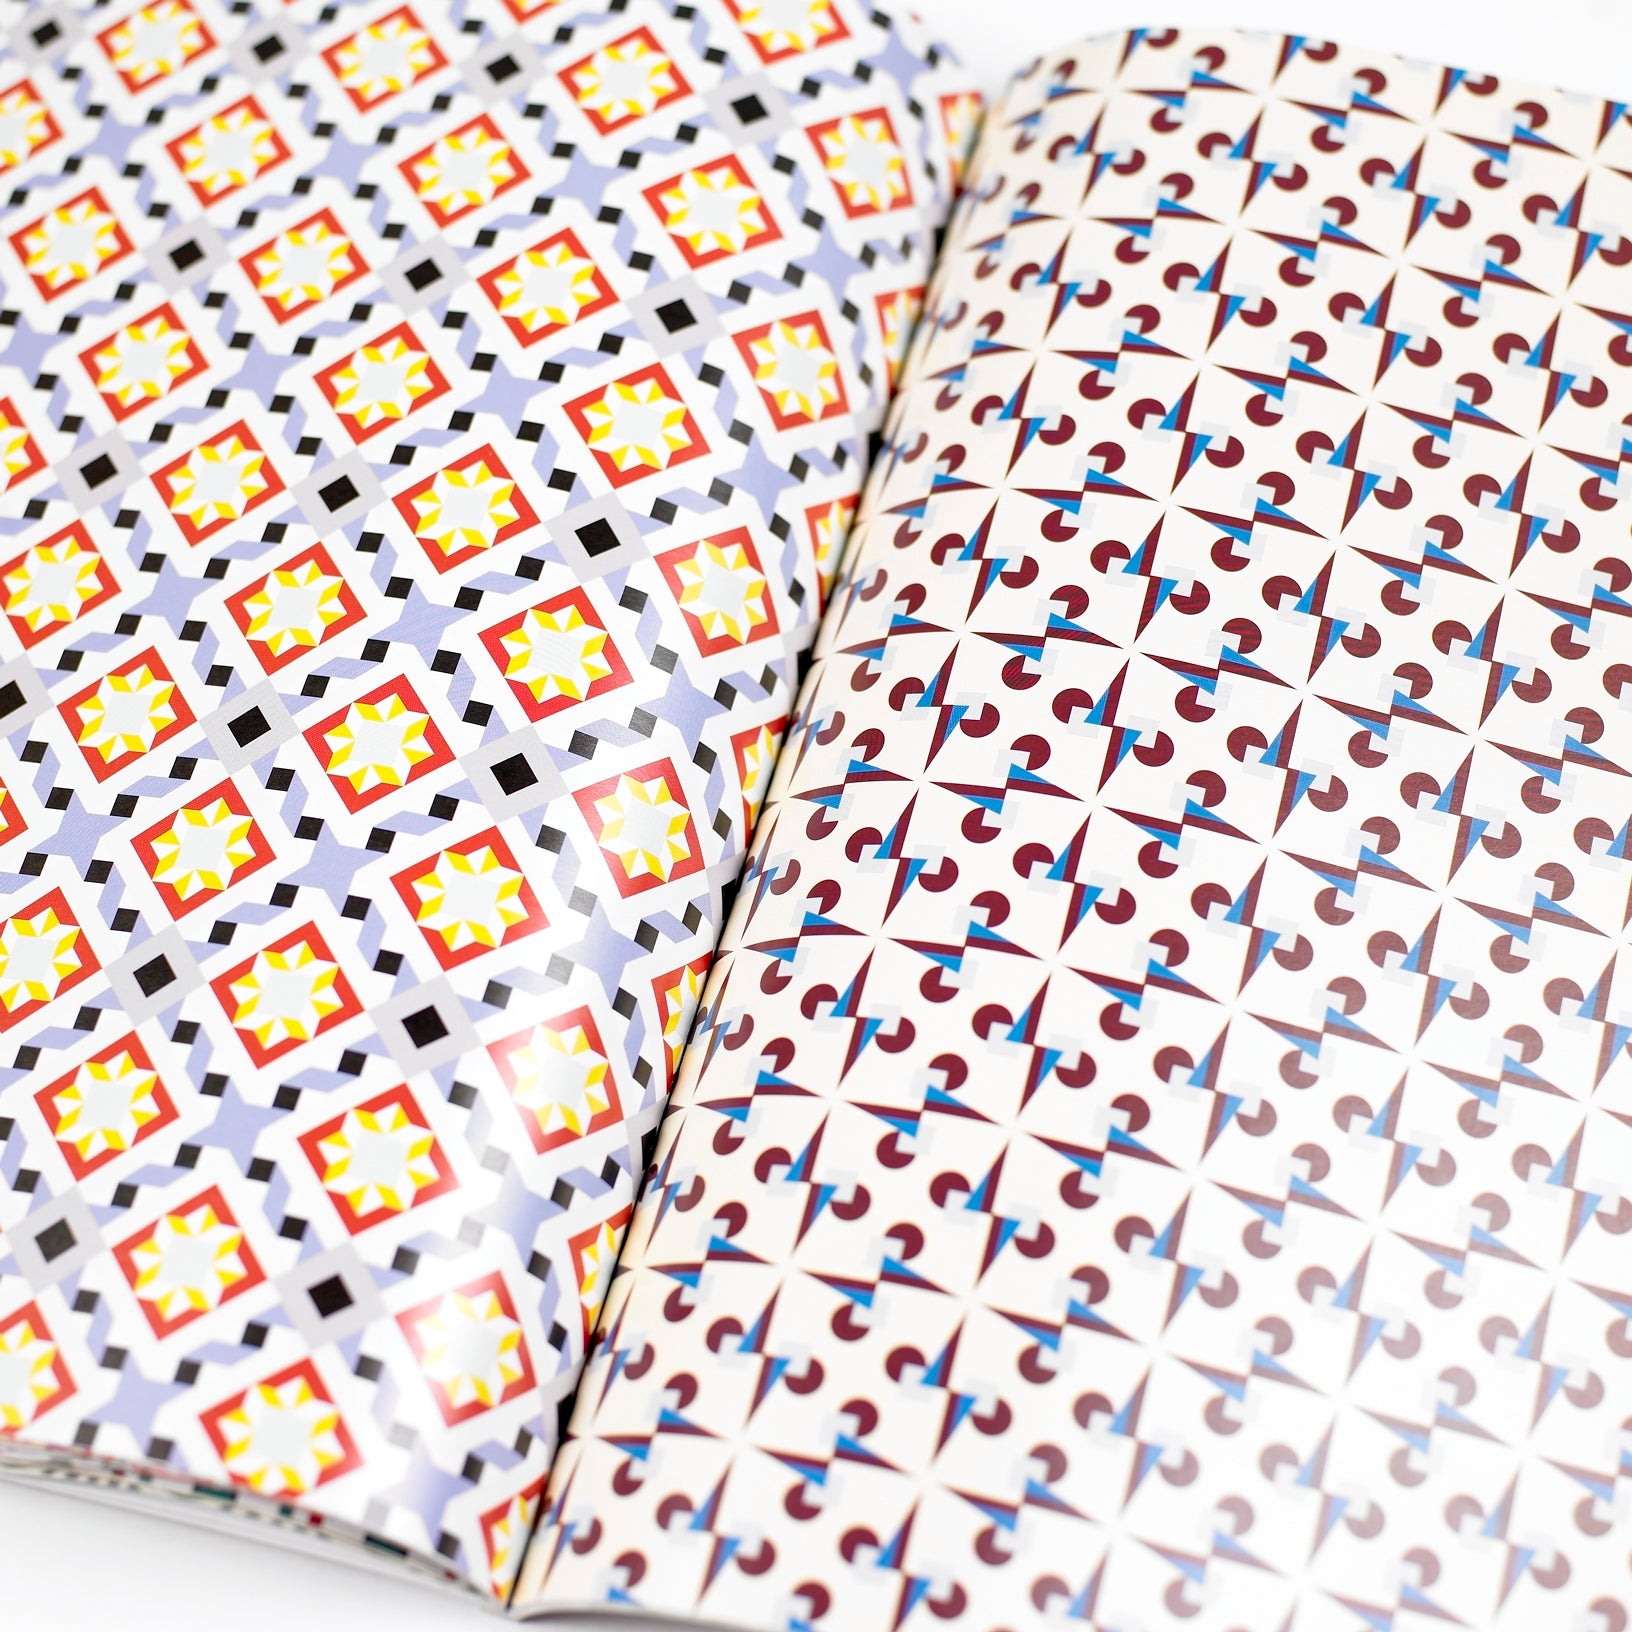 Gift & creative papers - Barcelona Tiles